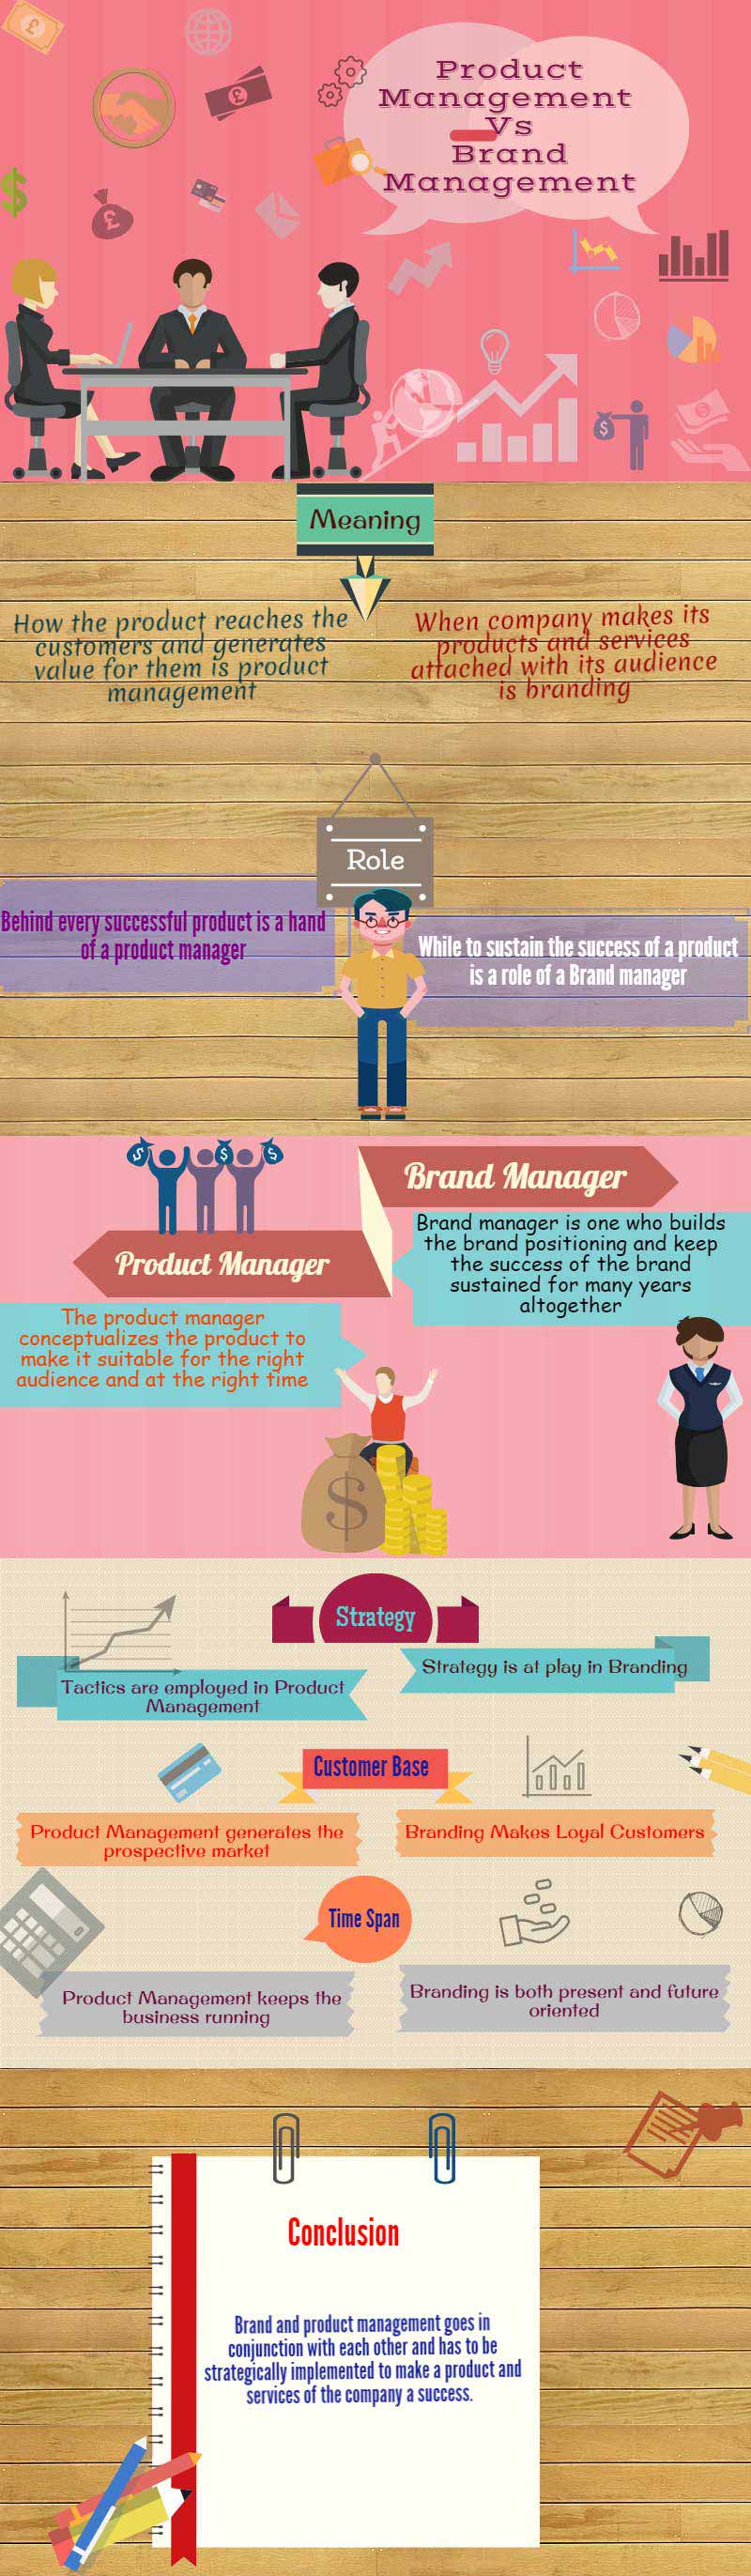 product management vs brand management